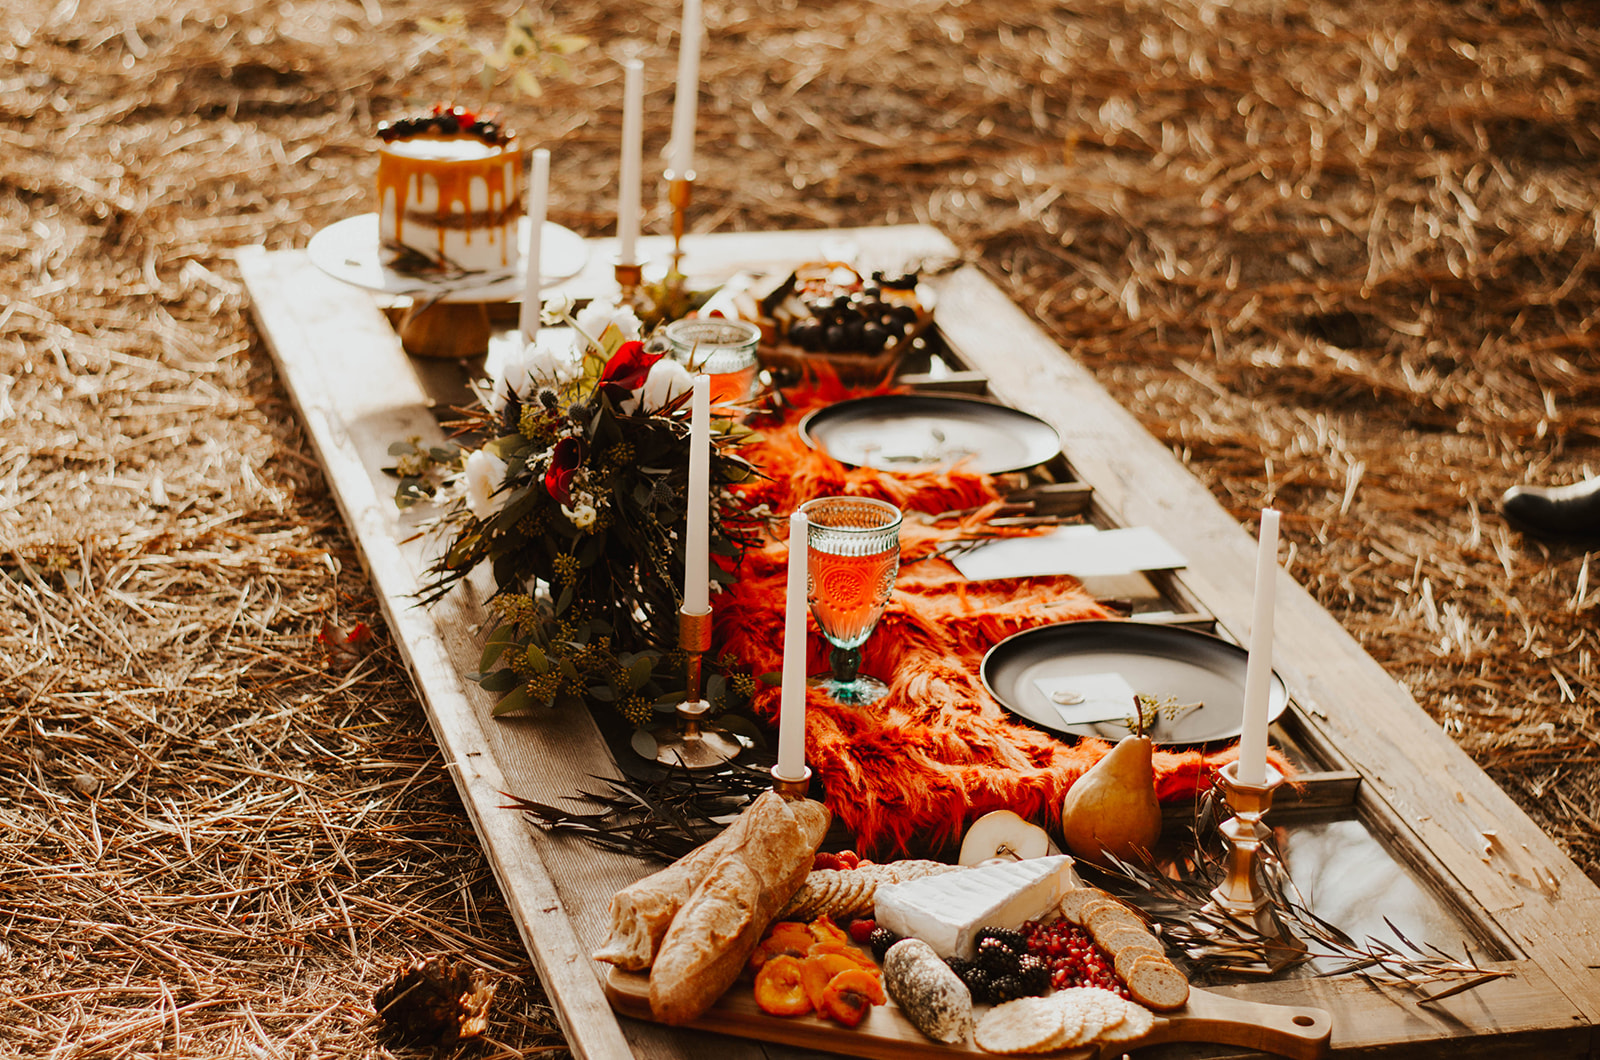 spokane wedding elopement plated meal image